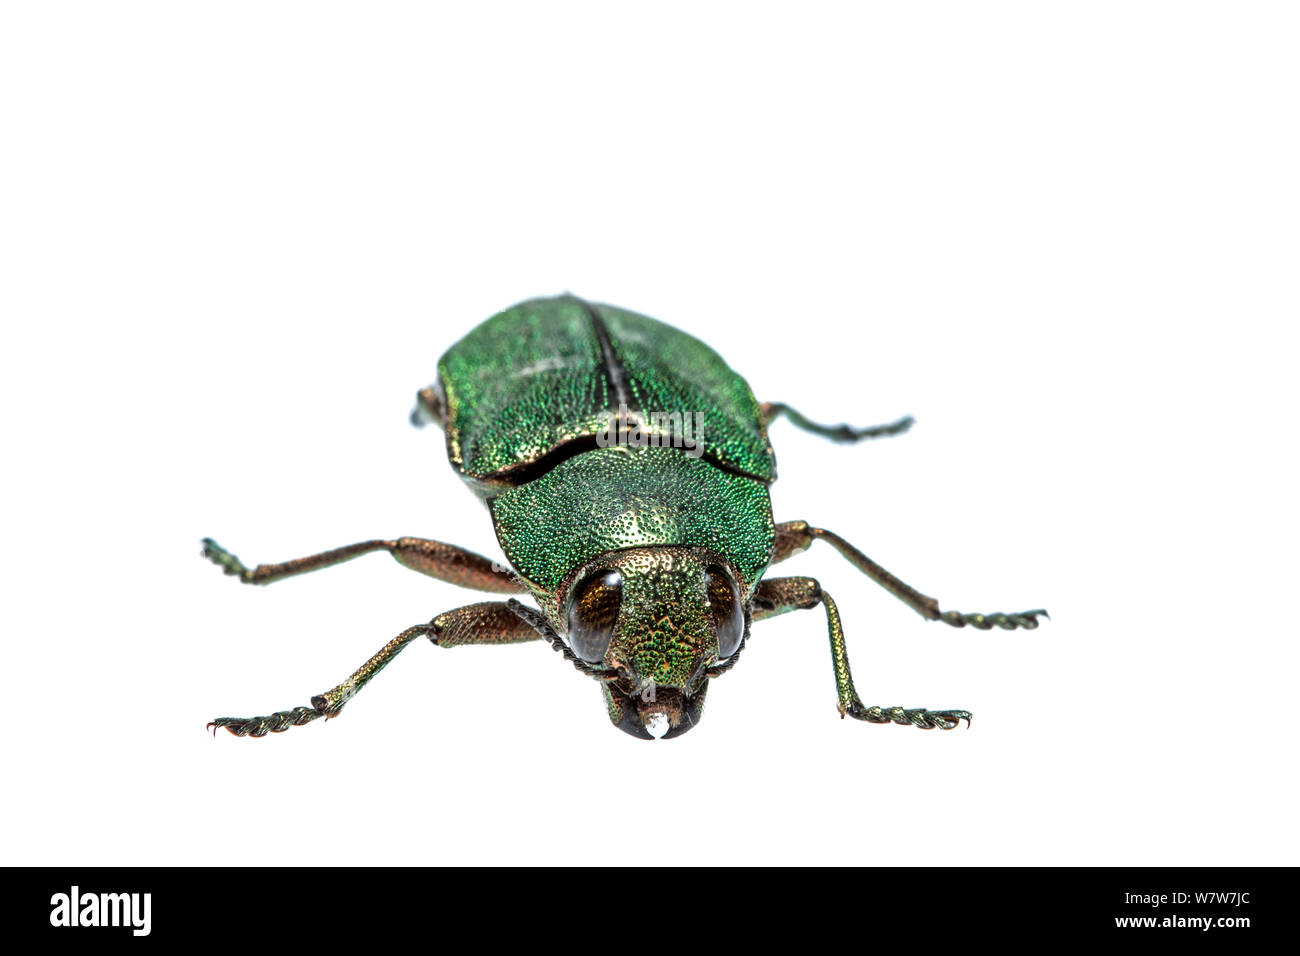 Jewel beetle (Buprestidae) Crete, Greece. Meetyourneighbours.net project. Stock Photo